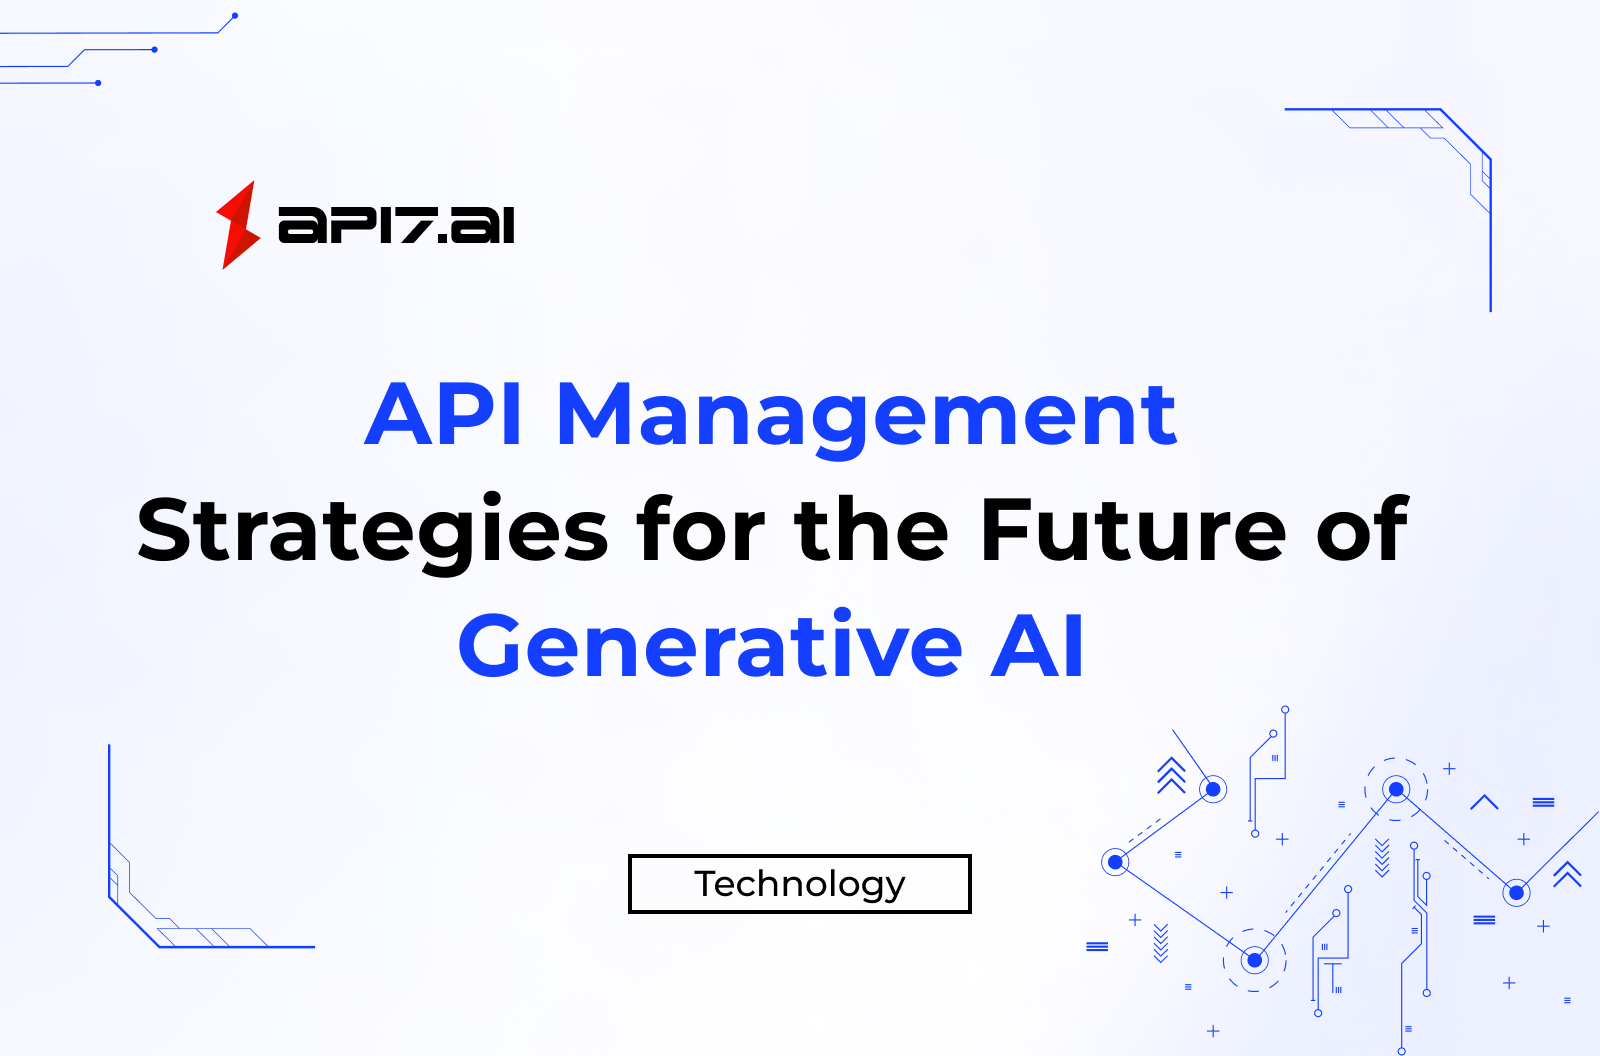 API Management Strategies for the Future of Generative AI